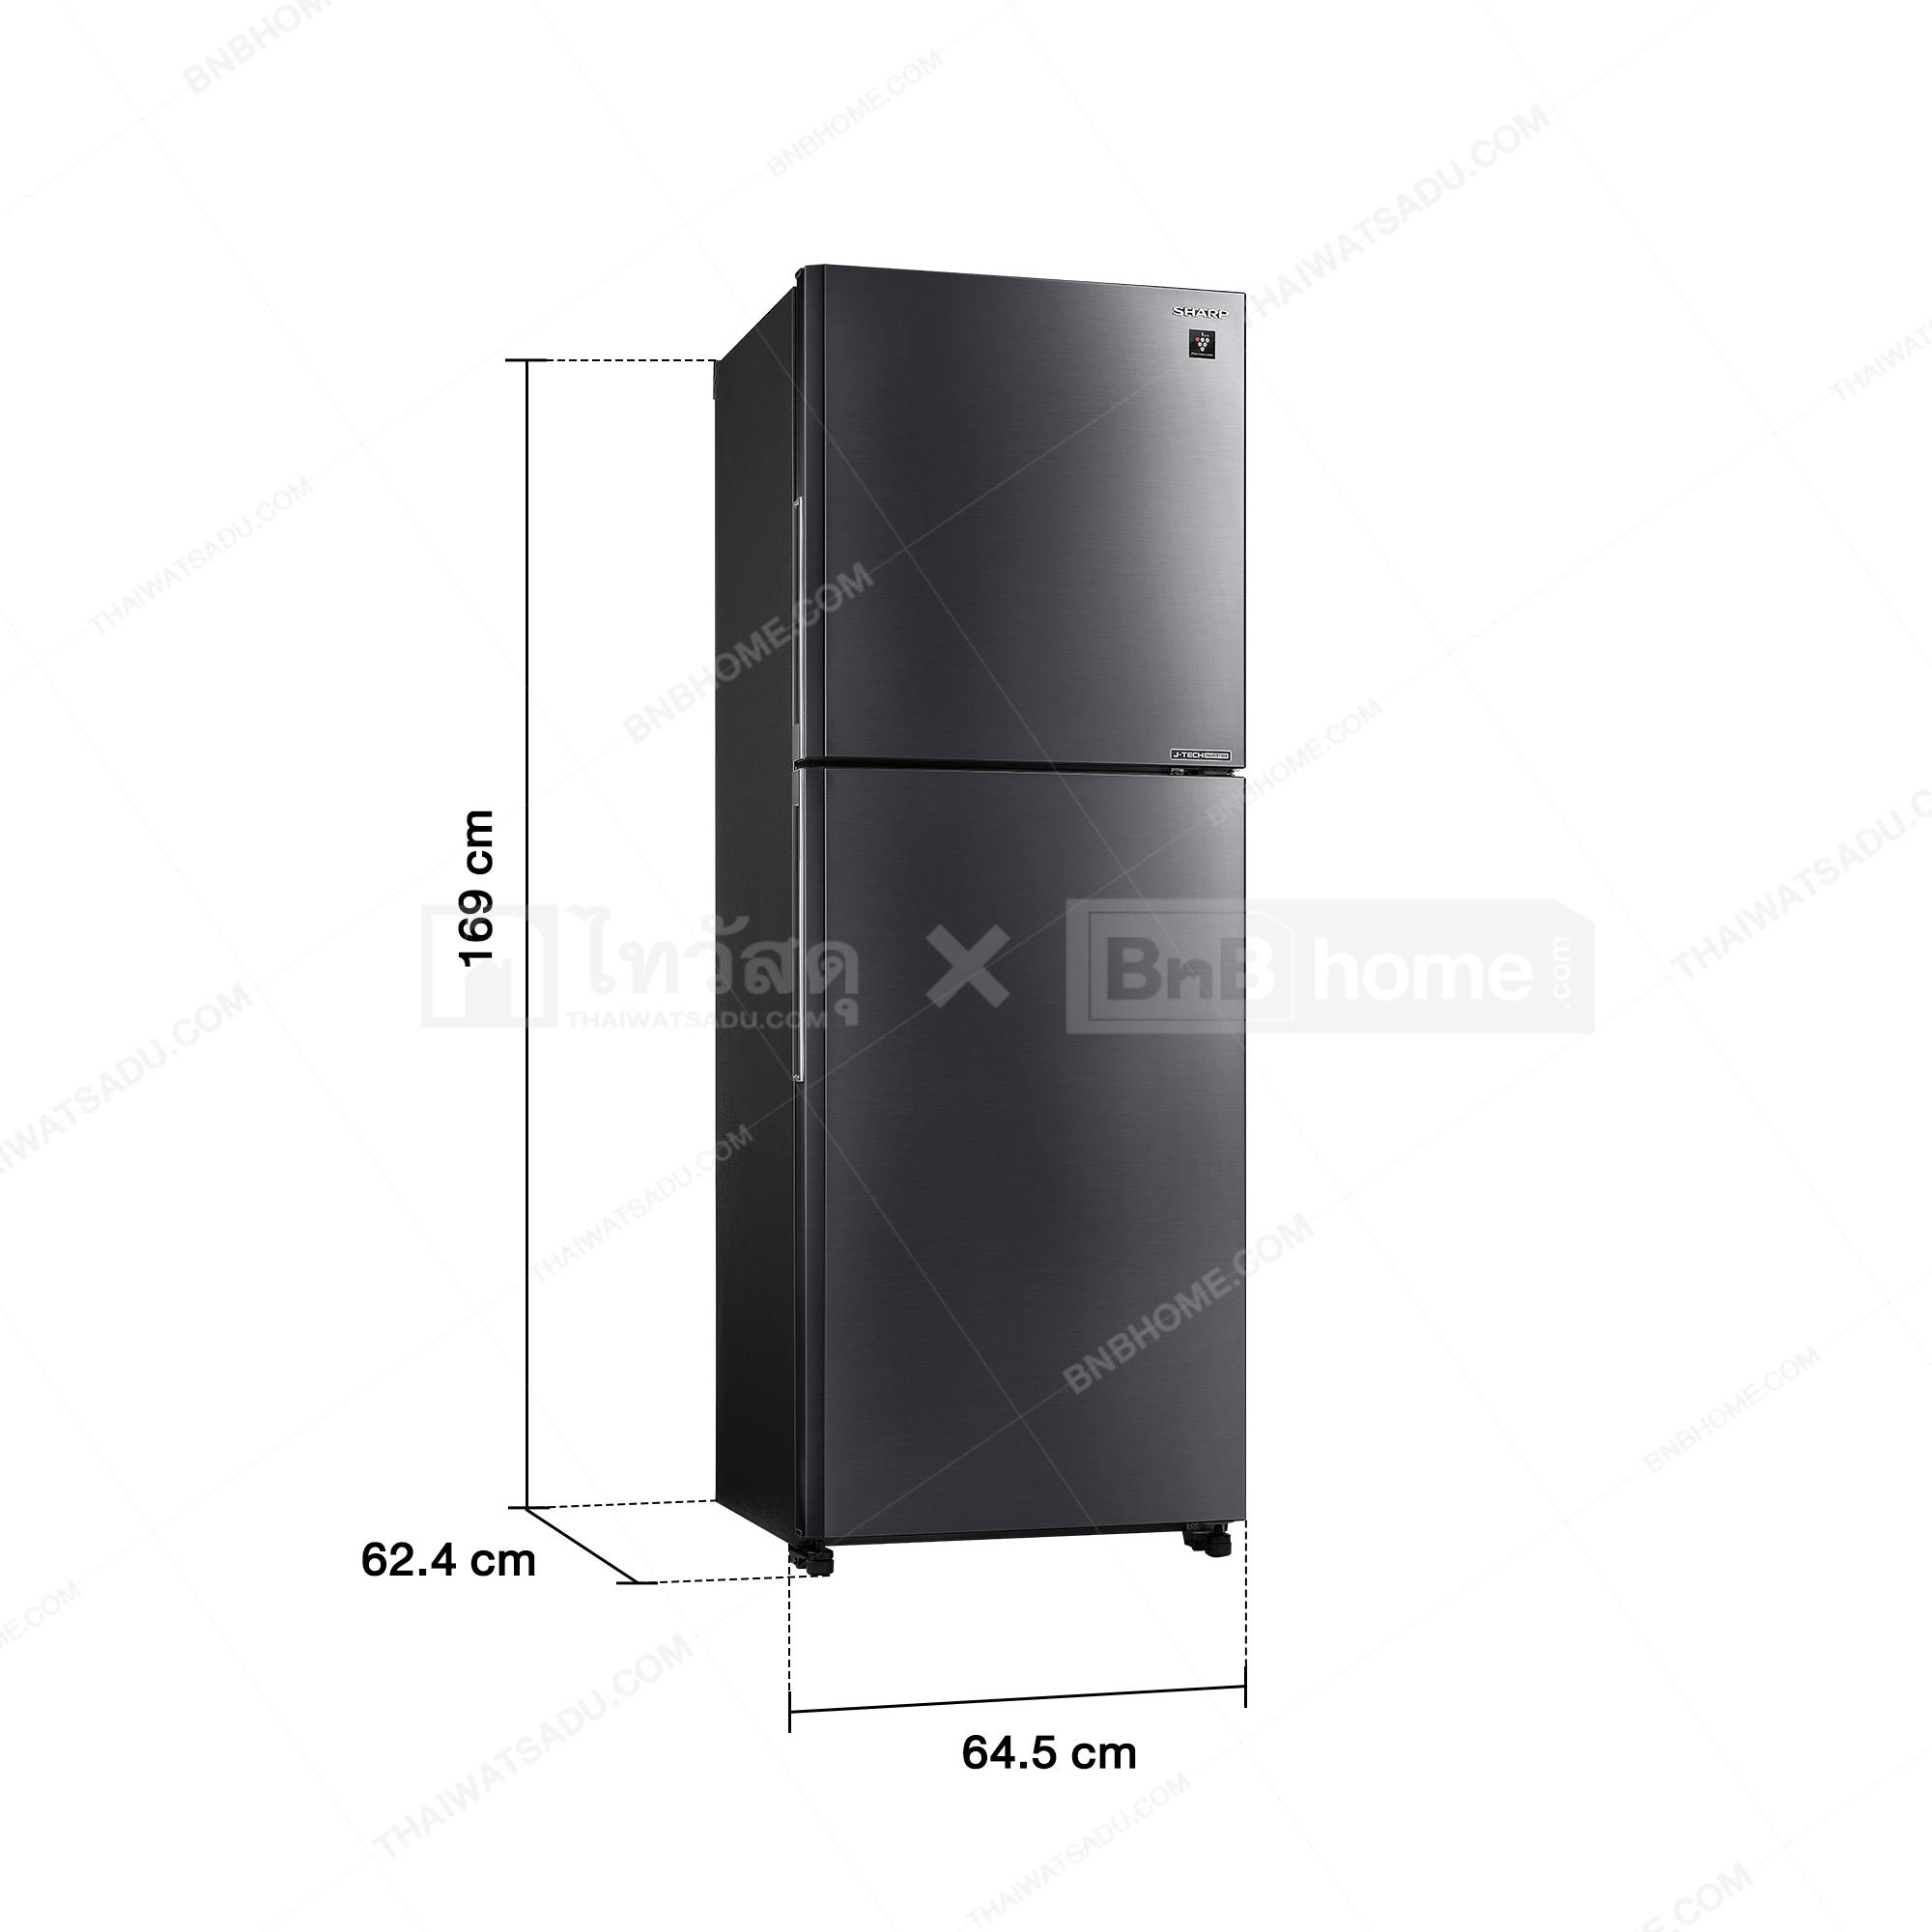 Q, THAI 2 WATSADU (SJ-XP300TP-DK), Sliver Door SHARP Refrigerator - Dark 10.6